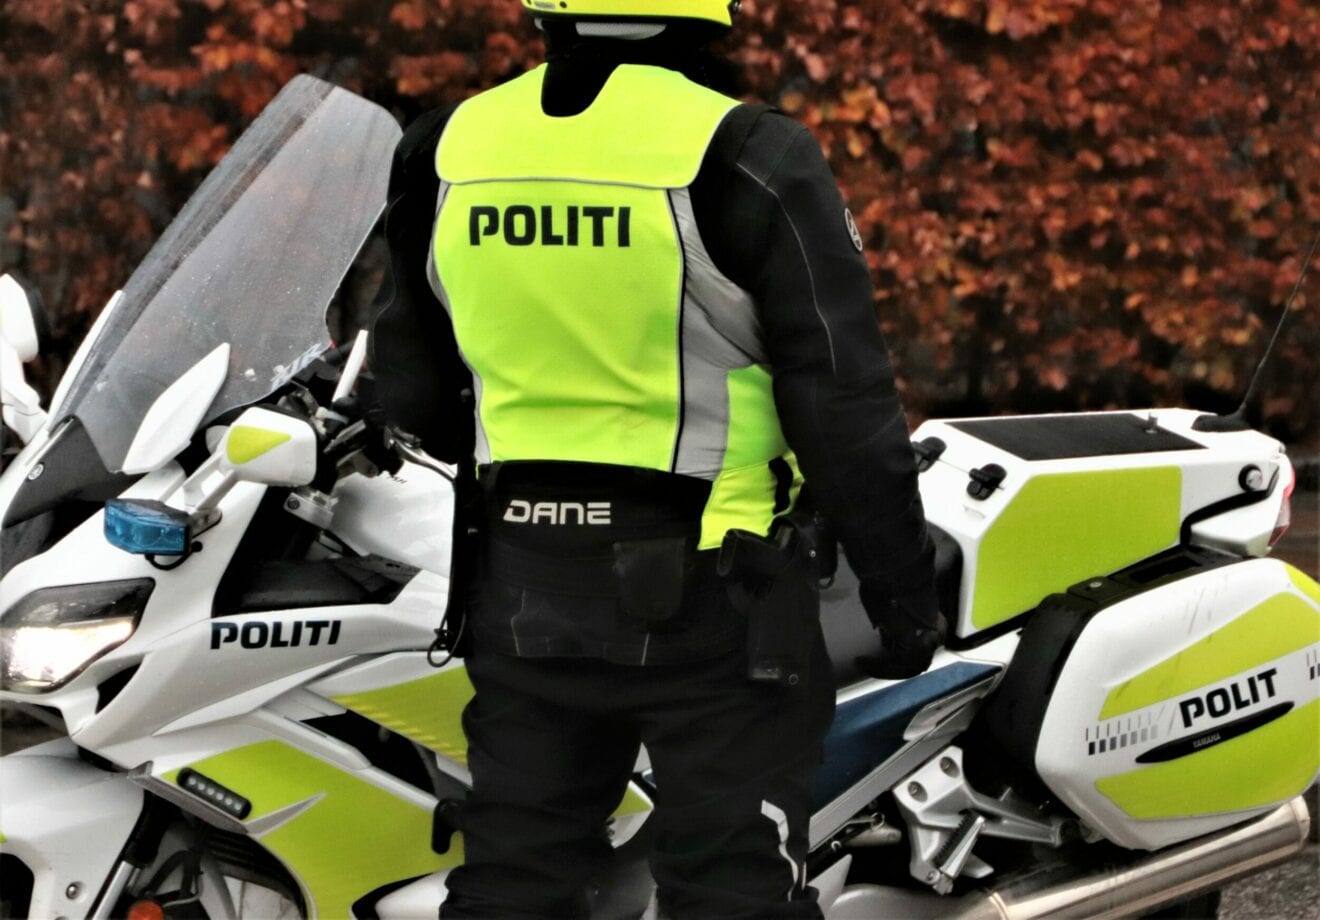 Politirapporten for Helsingør Kommune i tidsrummet 2021-06-10 til 2021-06-21